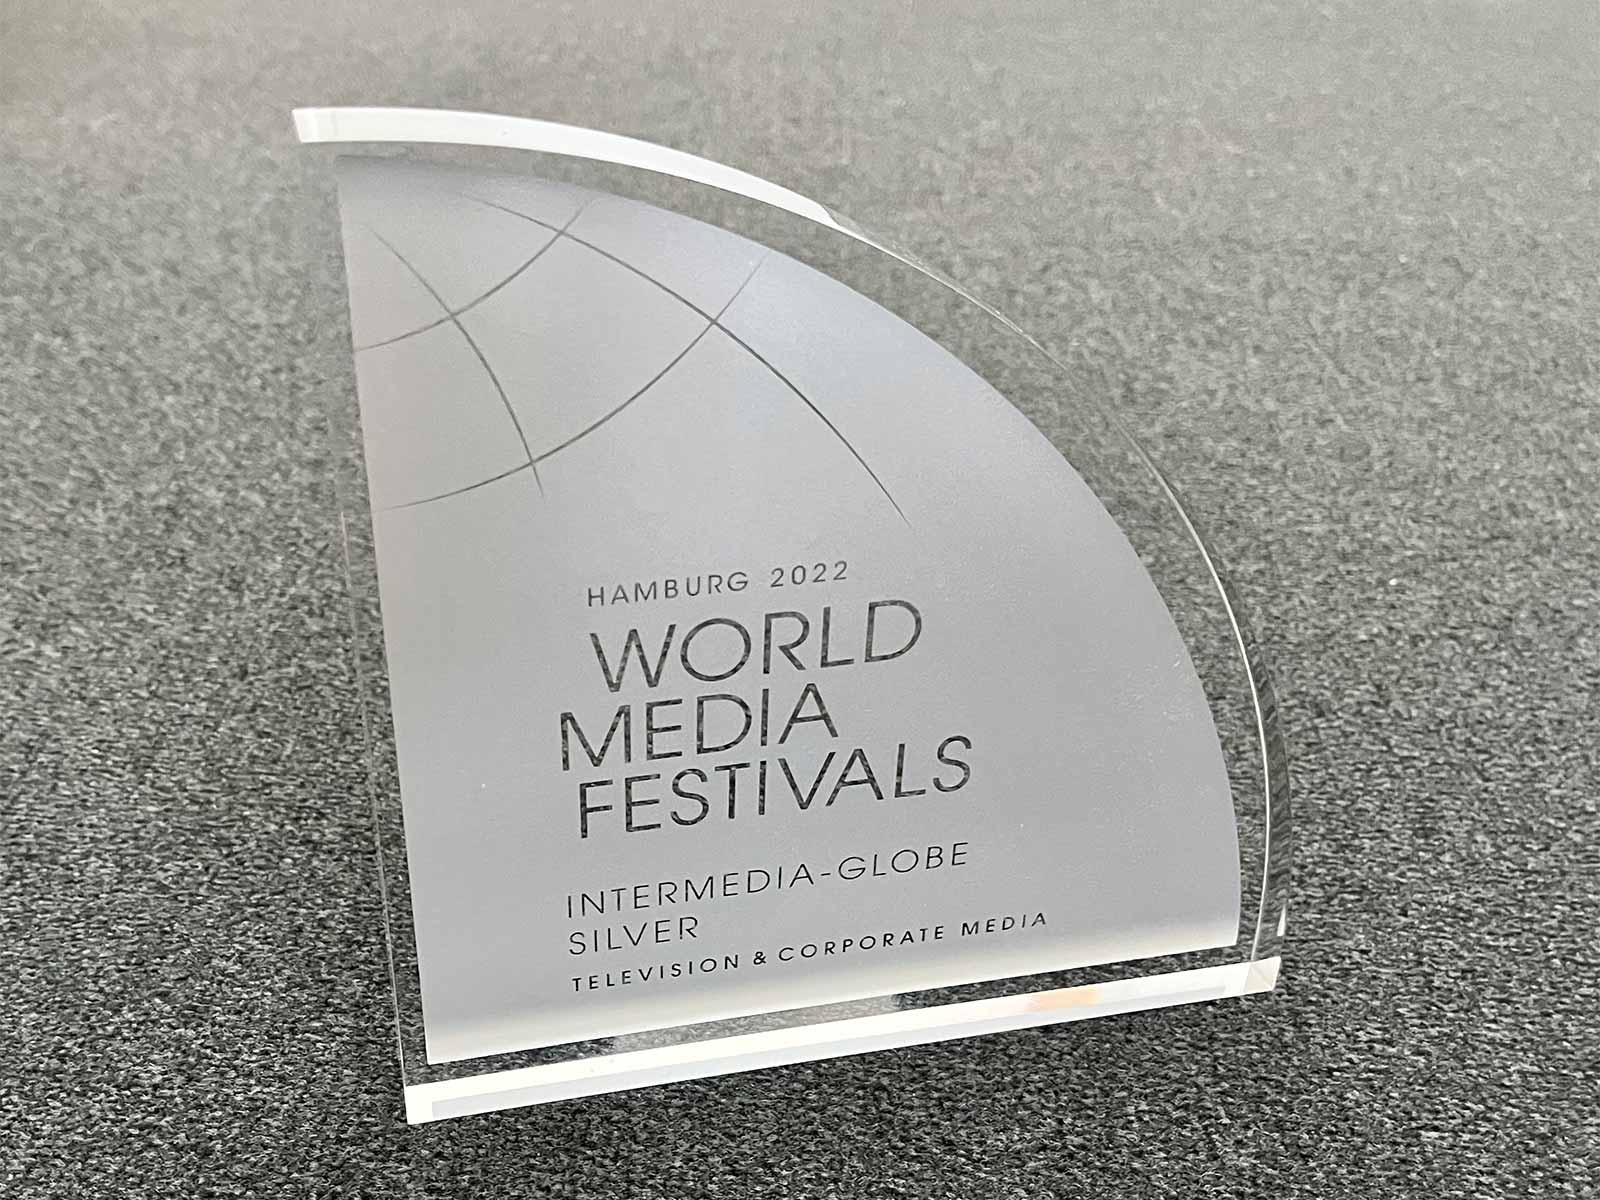 Intermedia-Globe SILVER Award 